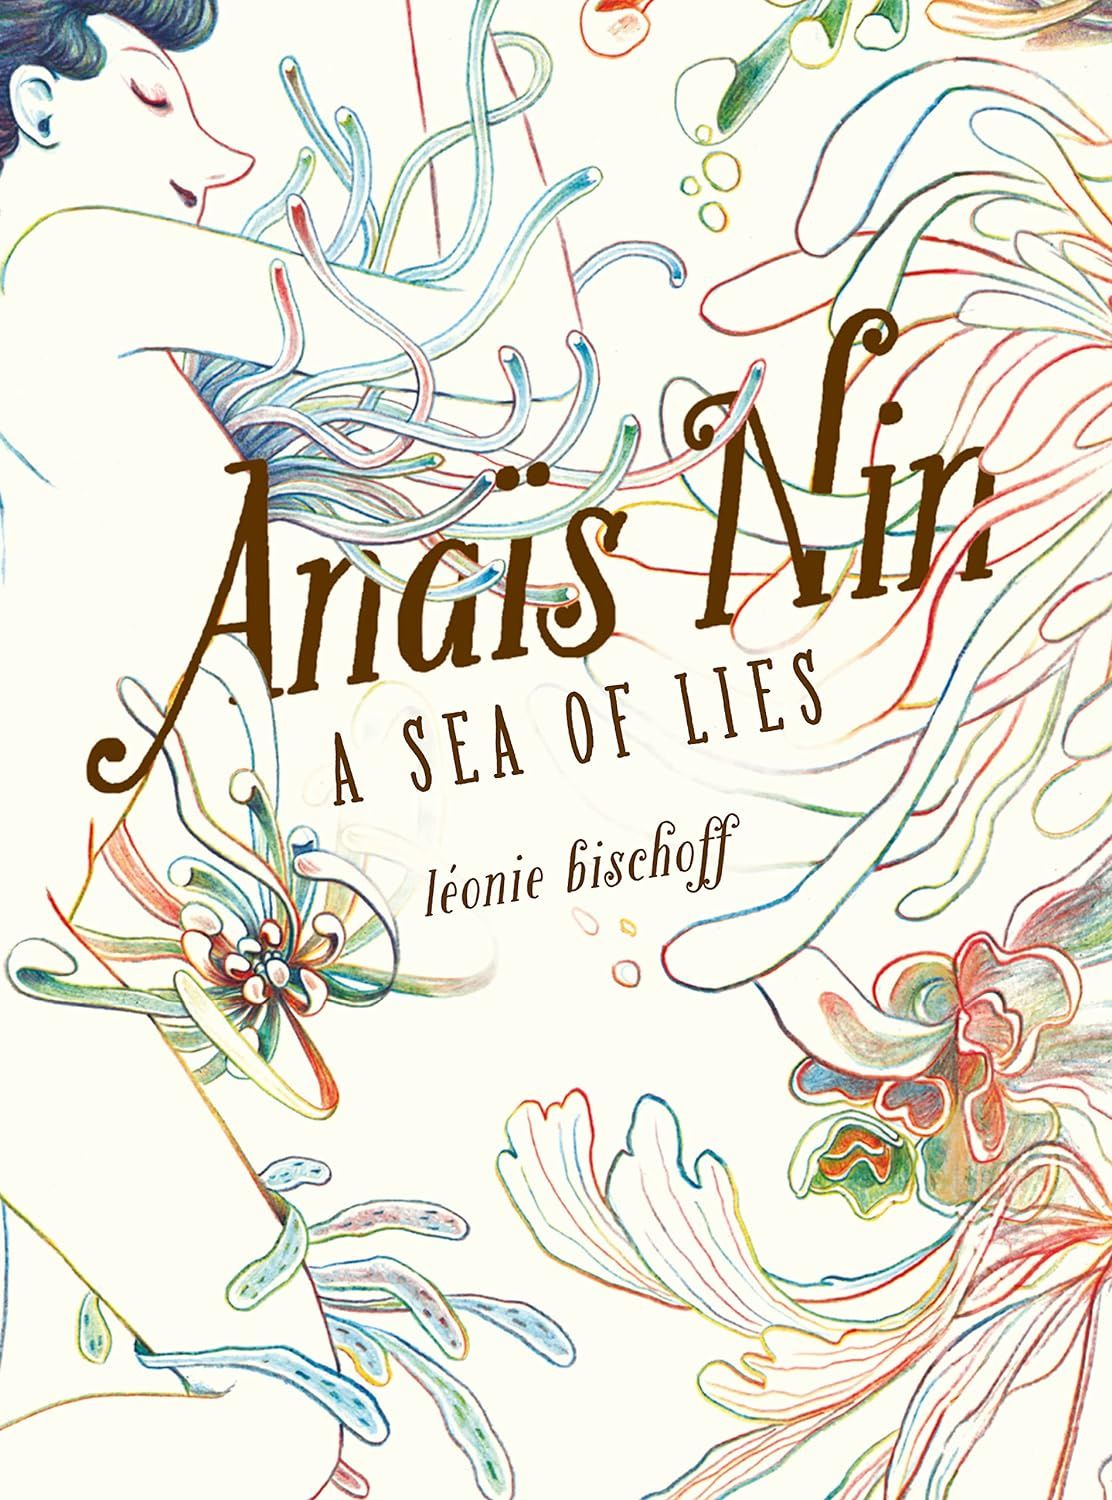 Anaïs Nin: A Sea of Lies